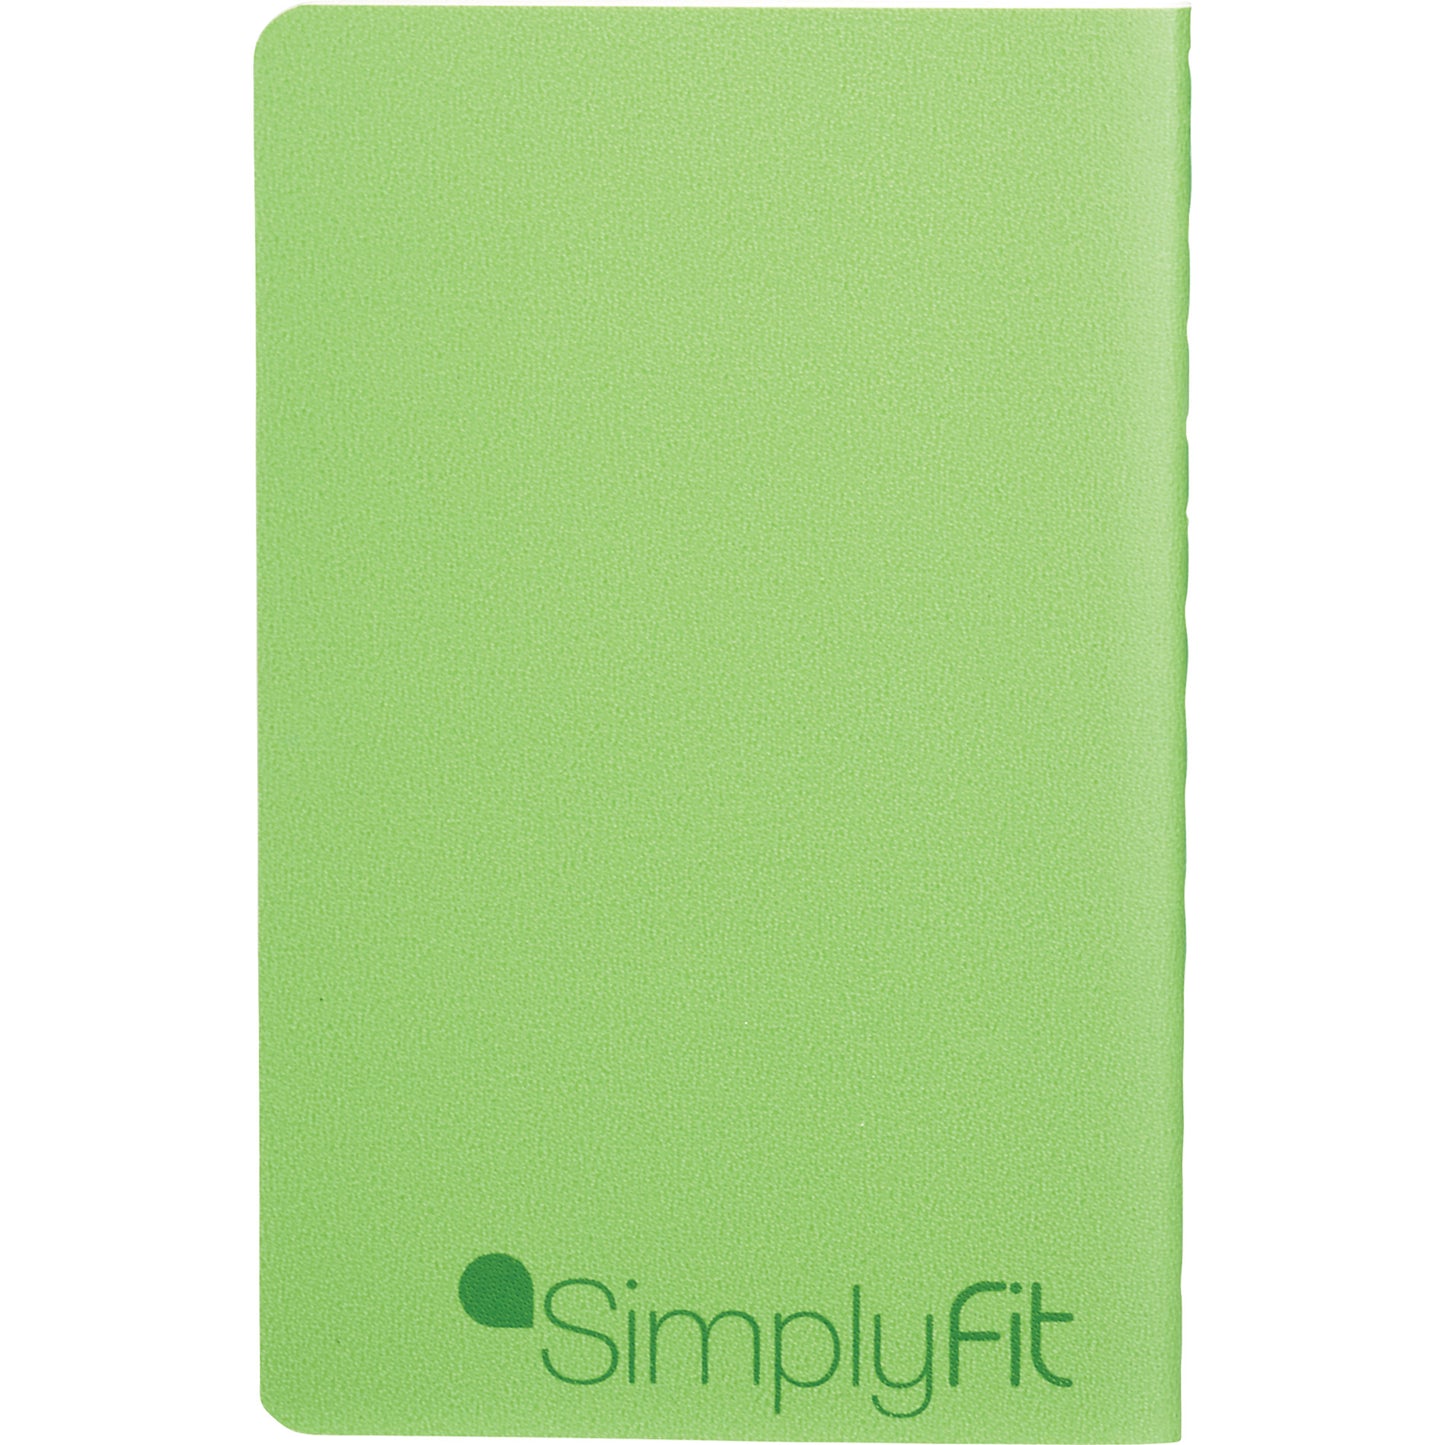 SimplyFit Fitness Jotter 5"x2.5"